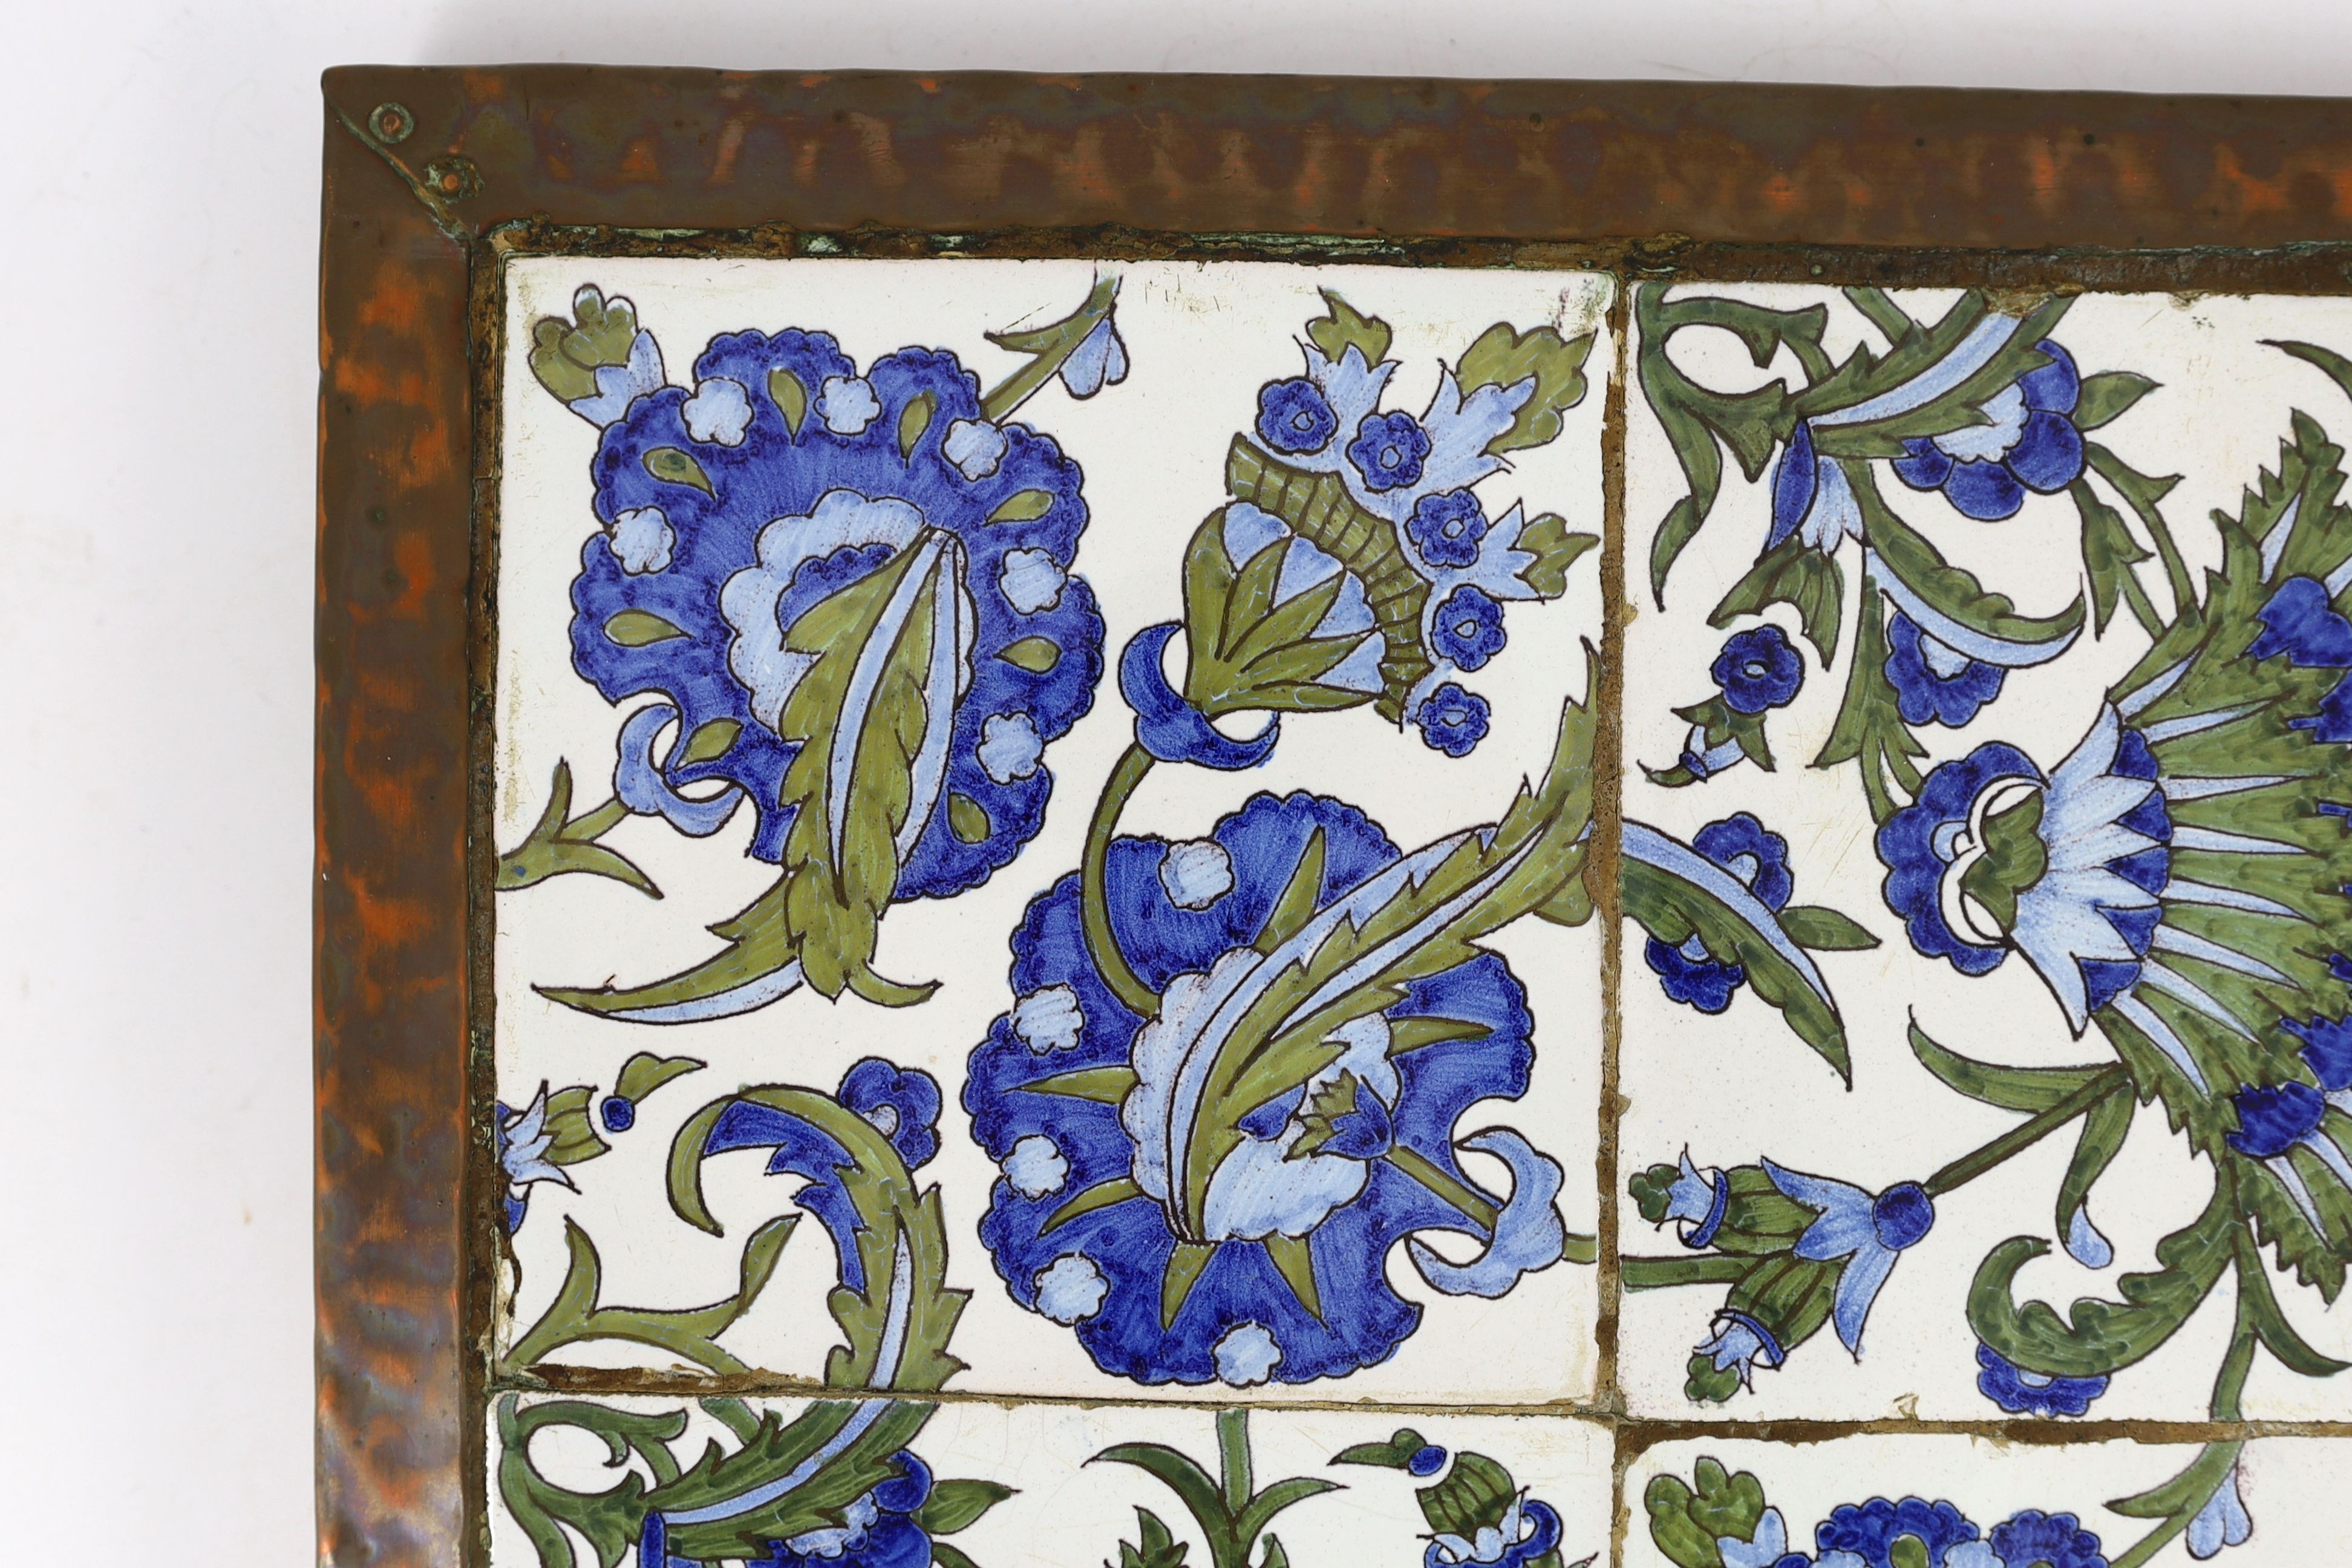 An Arts and Crafts de Morgan style 4 tile panel - 36 x 36cm